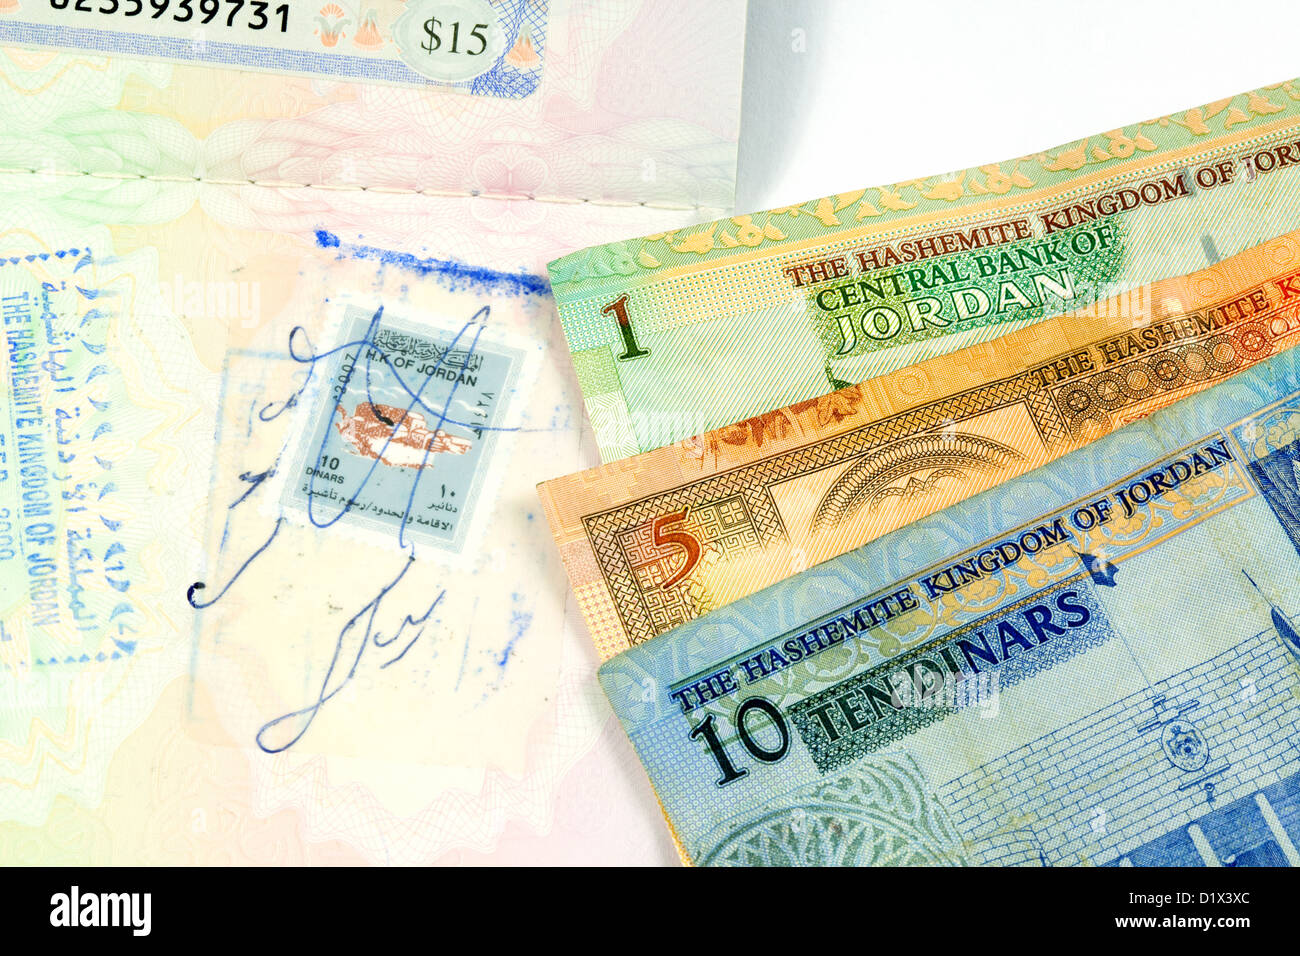 Jordan travel money currency dinars and visa stamp in passport Stock Photo